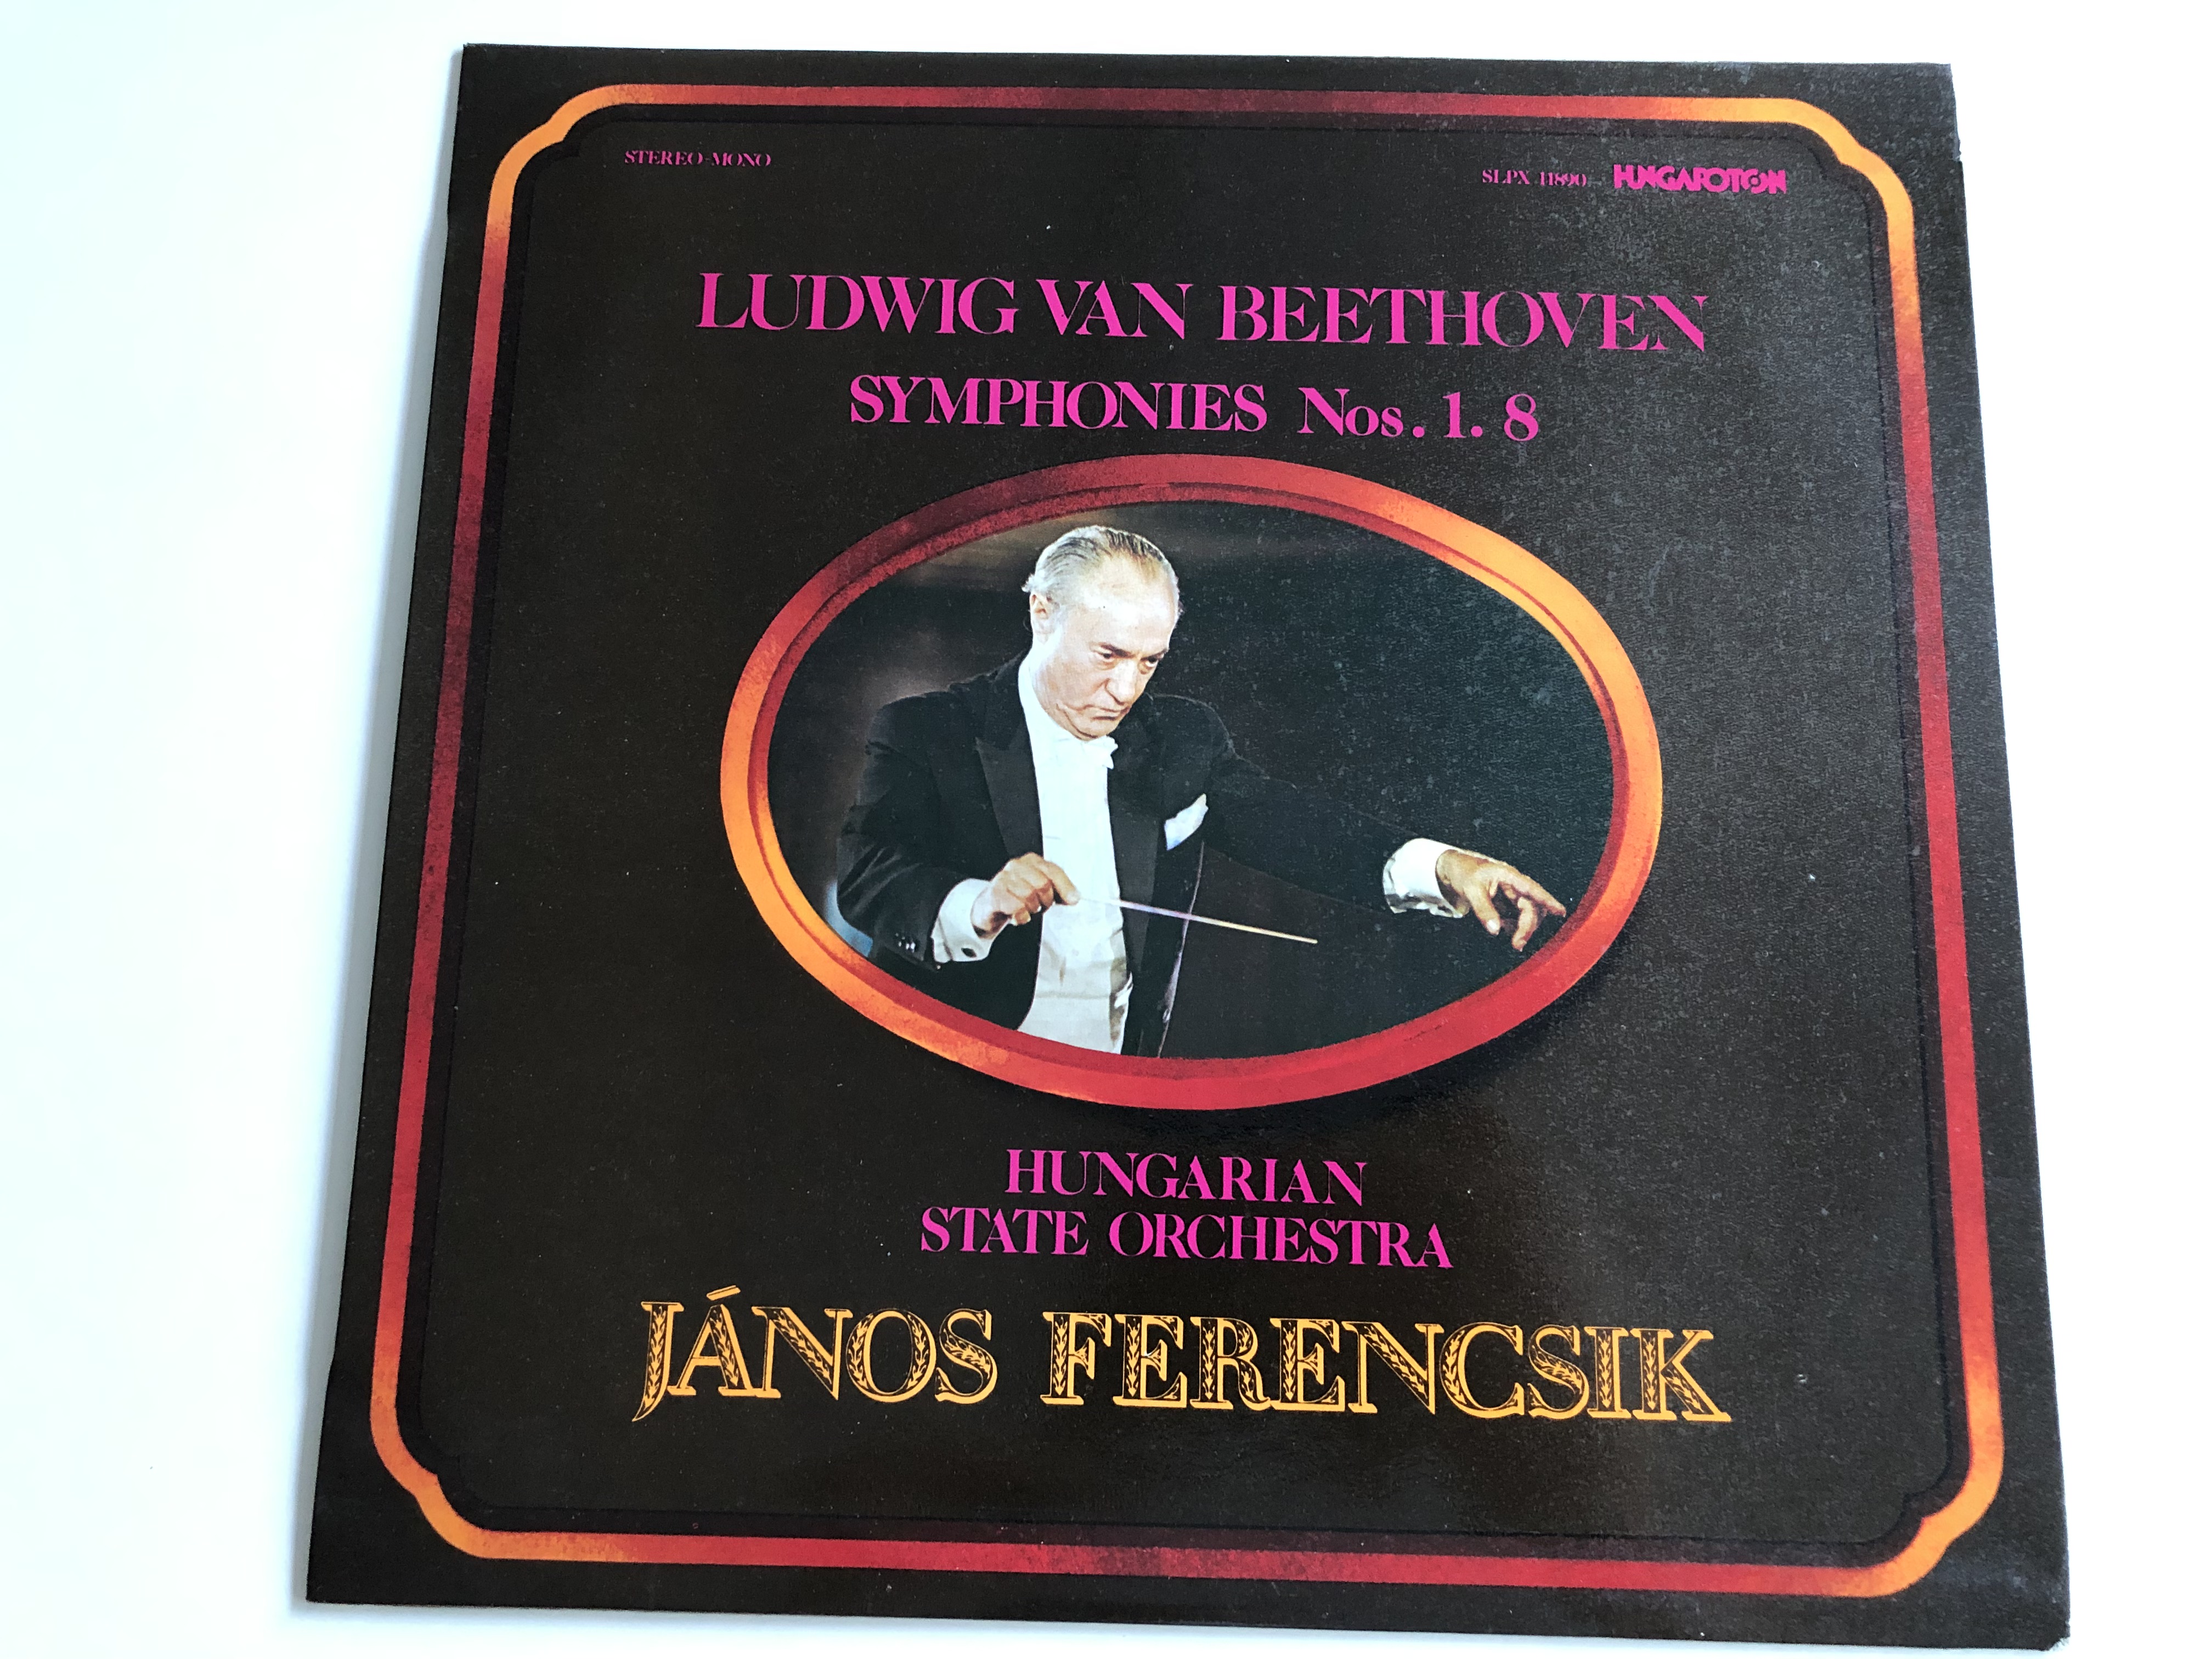 ludwig-van-beethoven-symphonies-nos.-1.-8-hungarian-state-orchestra-j-nos-ferencsik-hungaroton-lp-stereo-mono-slpx-11890-1-.jpg